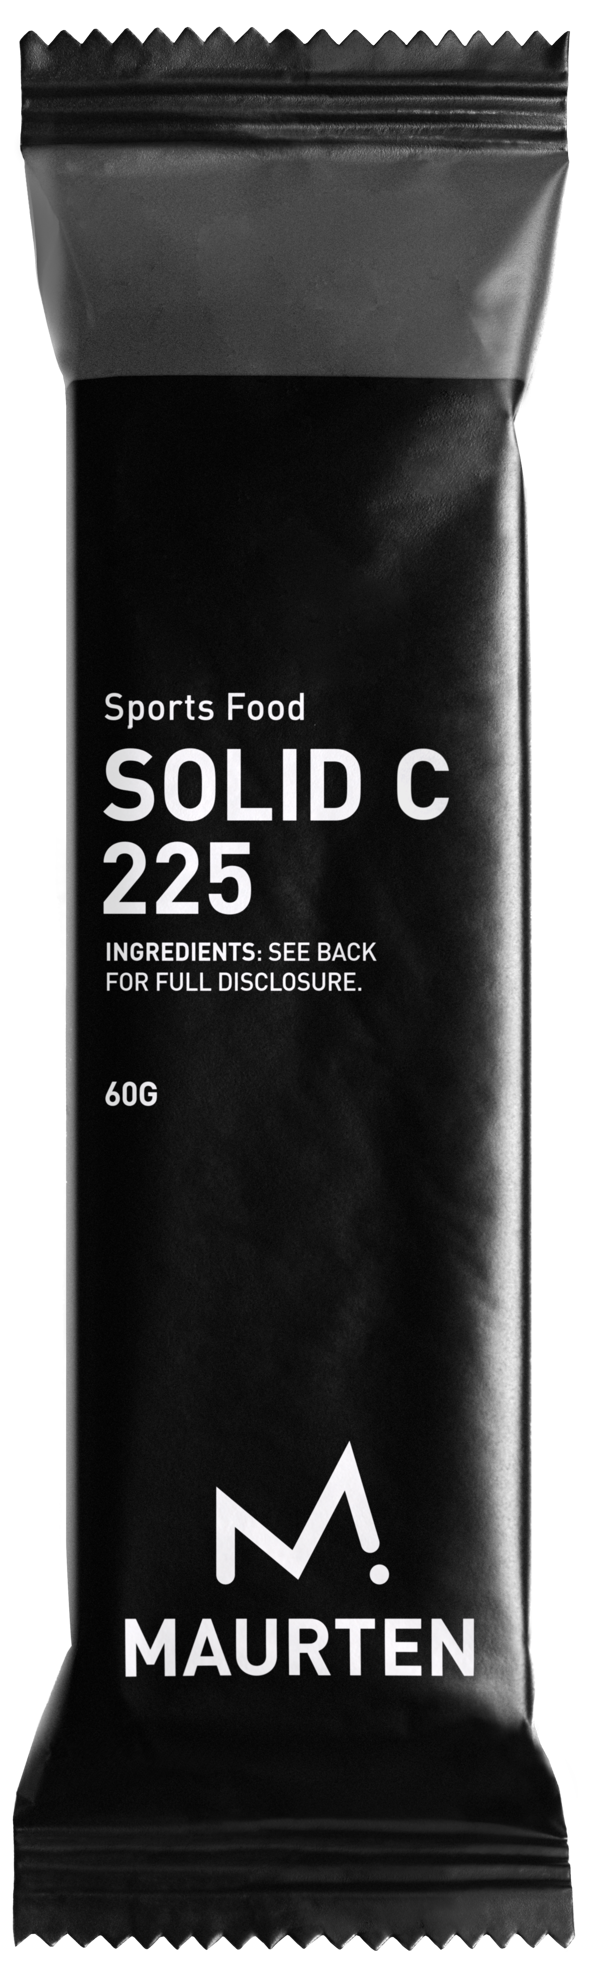 Maurten SOLID C 225 - 60g Energibar med smak av kakao